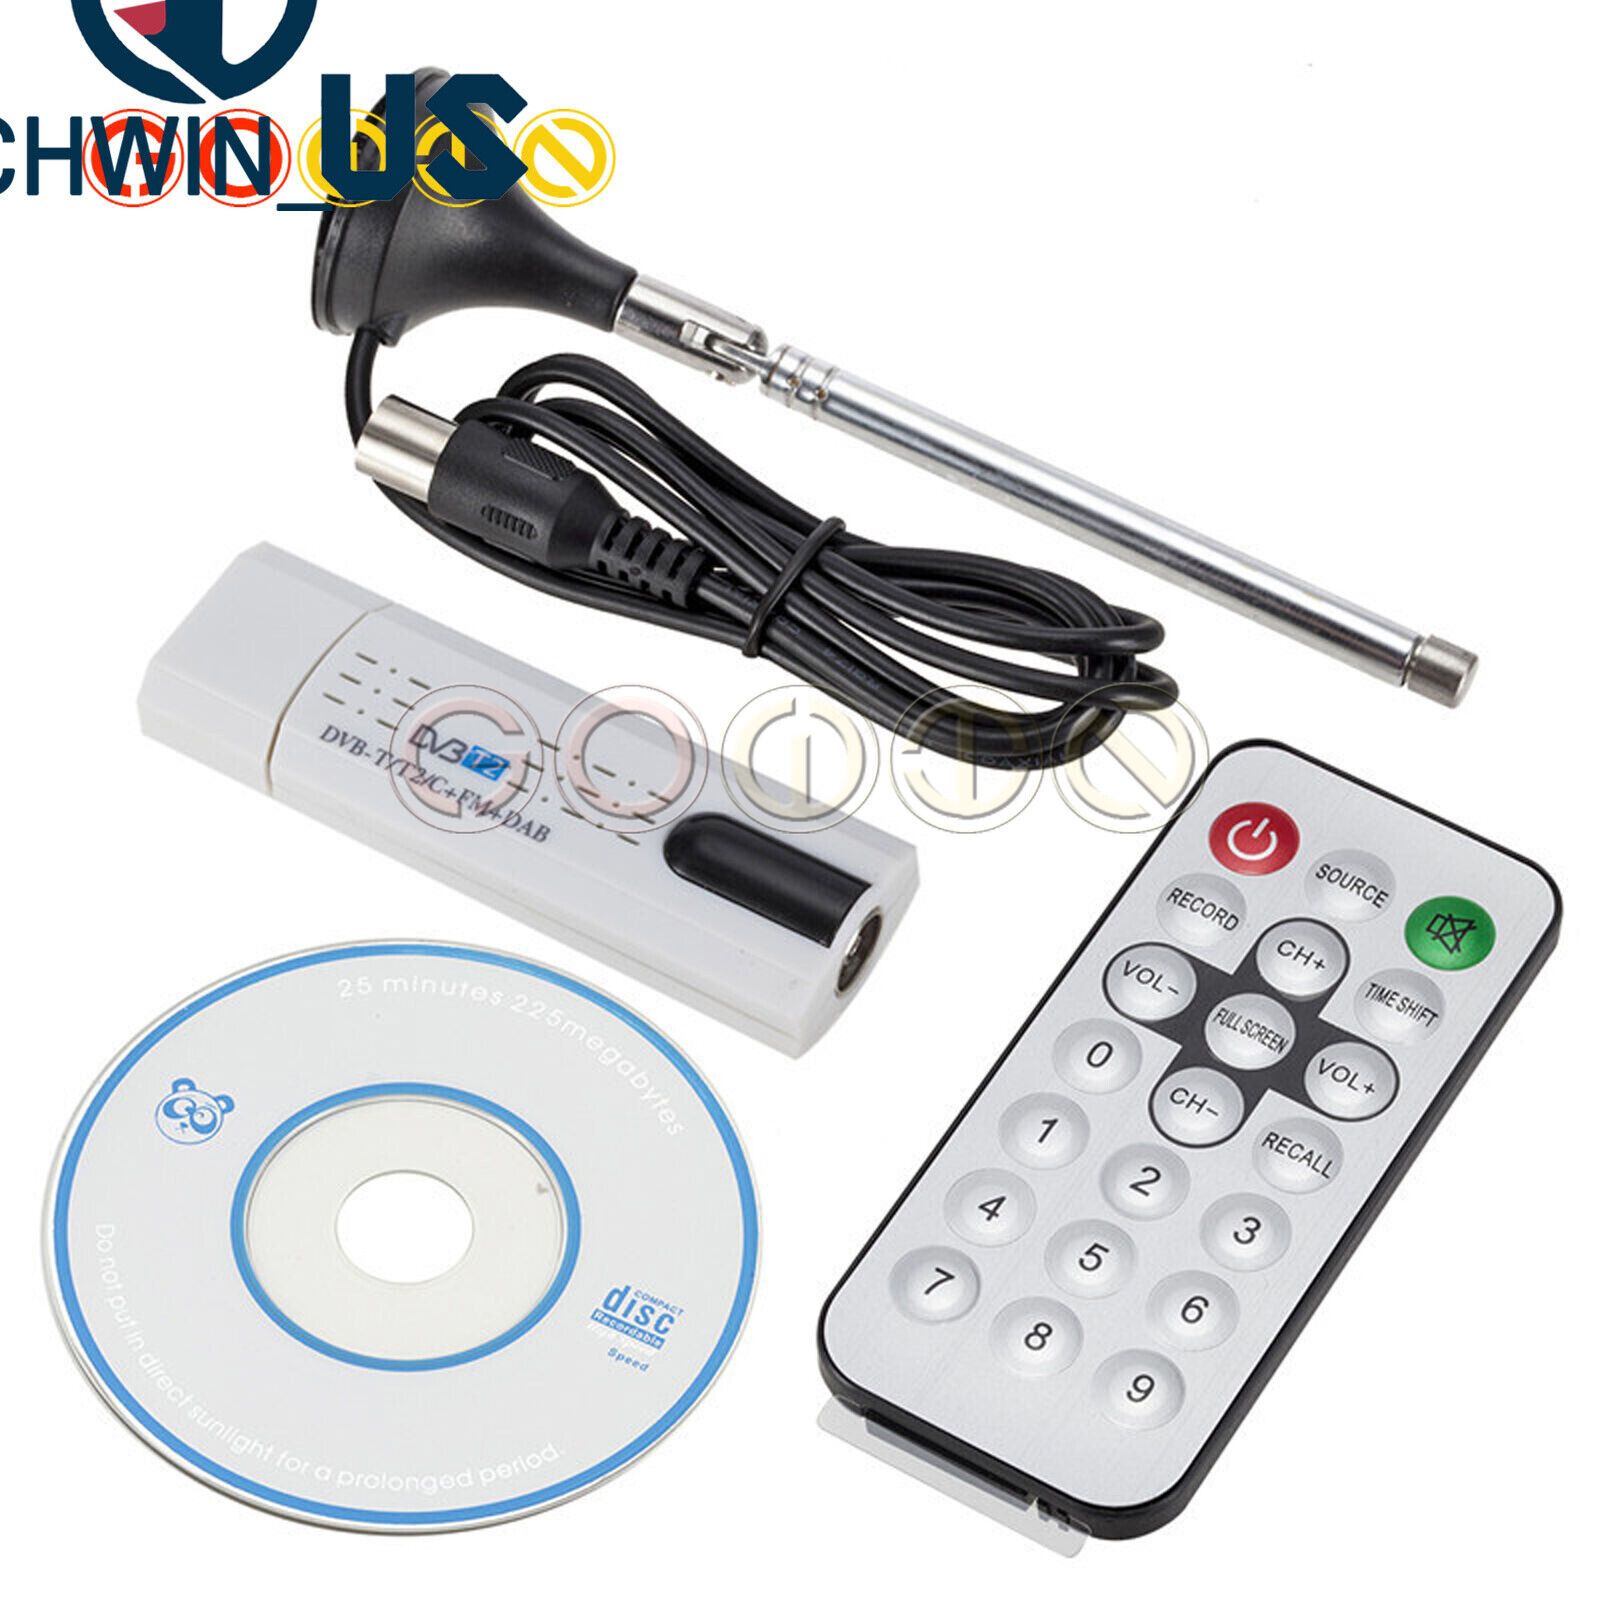 USB2.0 DVB - T2 FM DAB HDTV Stick TV Tuner Receiver (DVB-T/T2/DVB-C+FM+DAB+SDR)